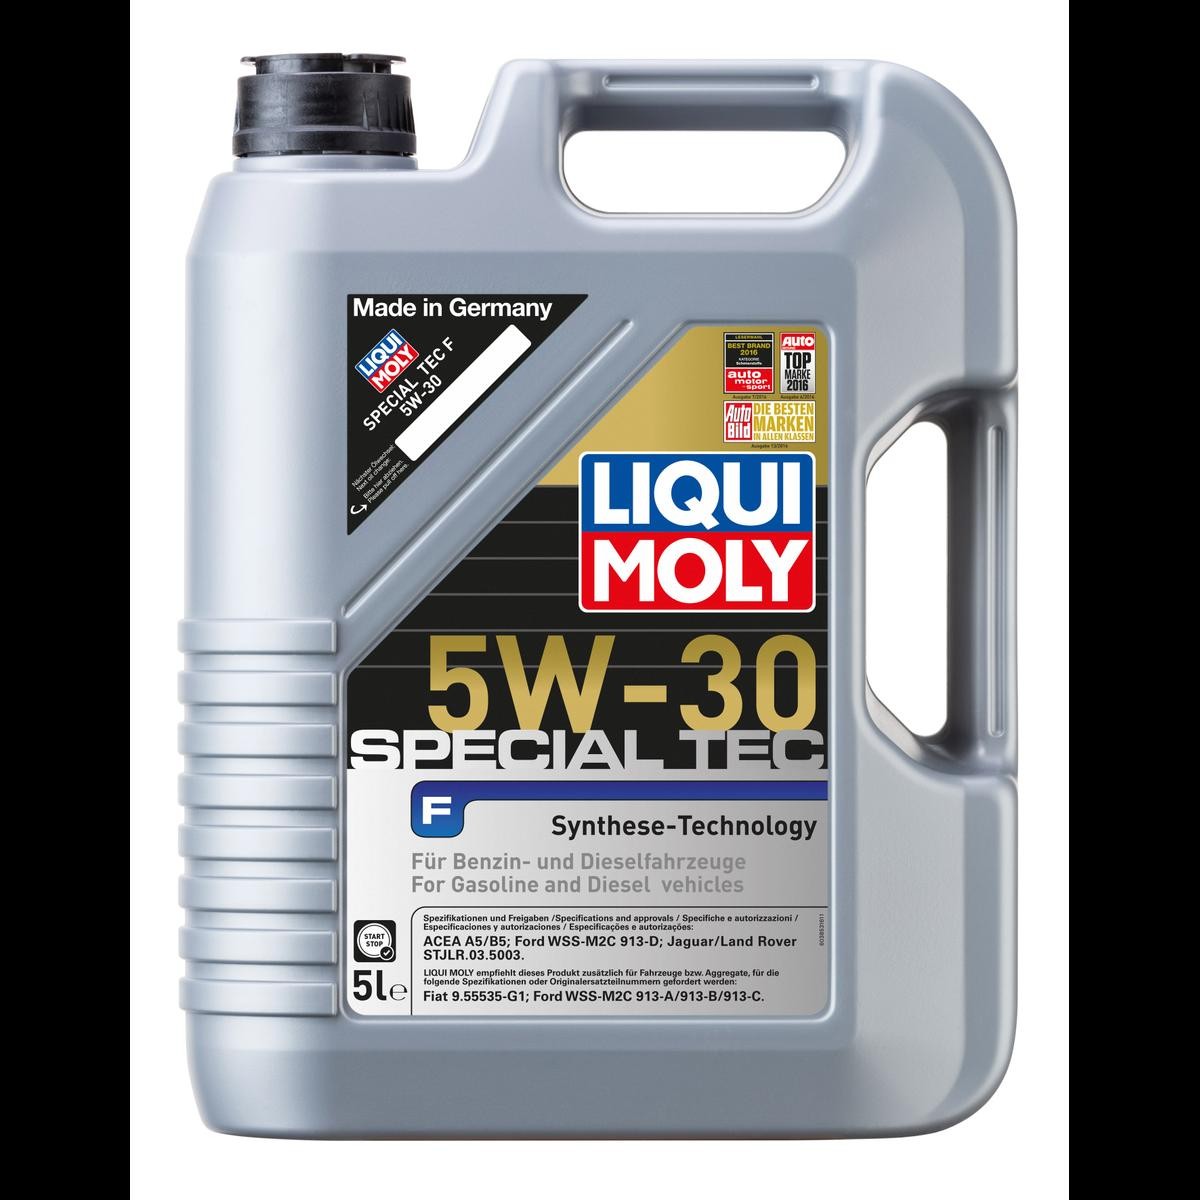 Volvo S60 Engine oil LIQUI MOLY 2326 cheap